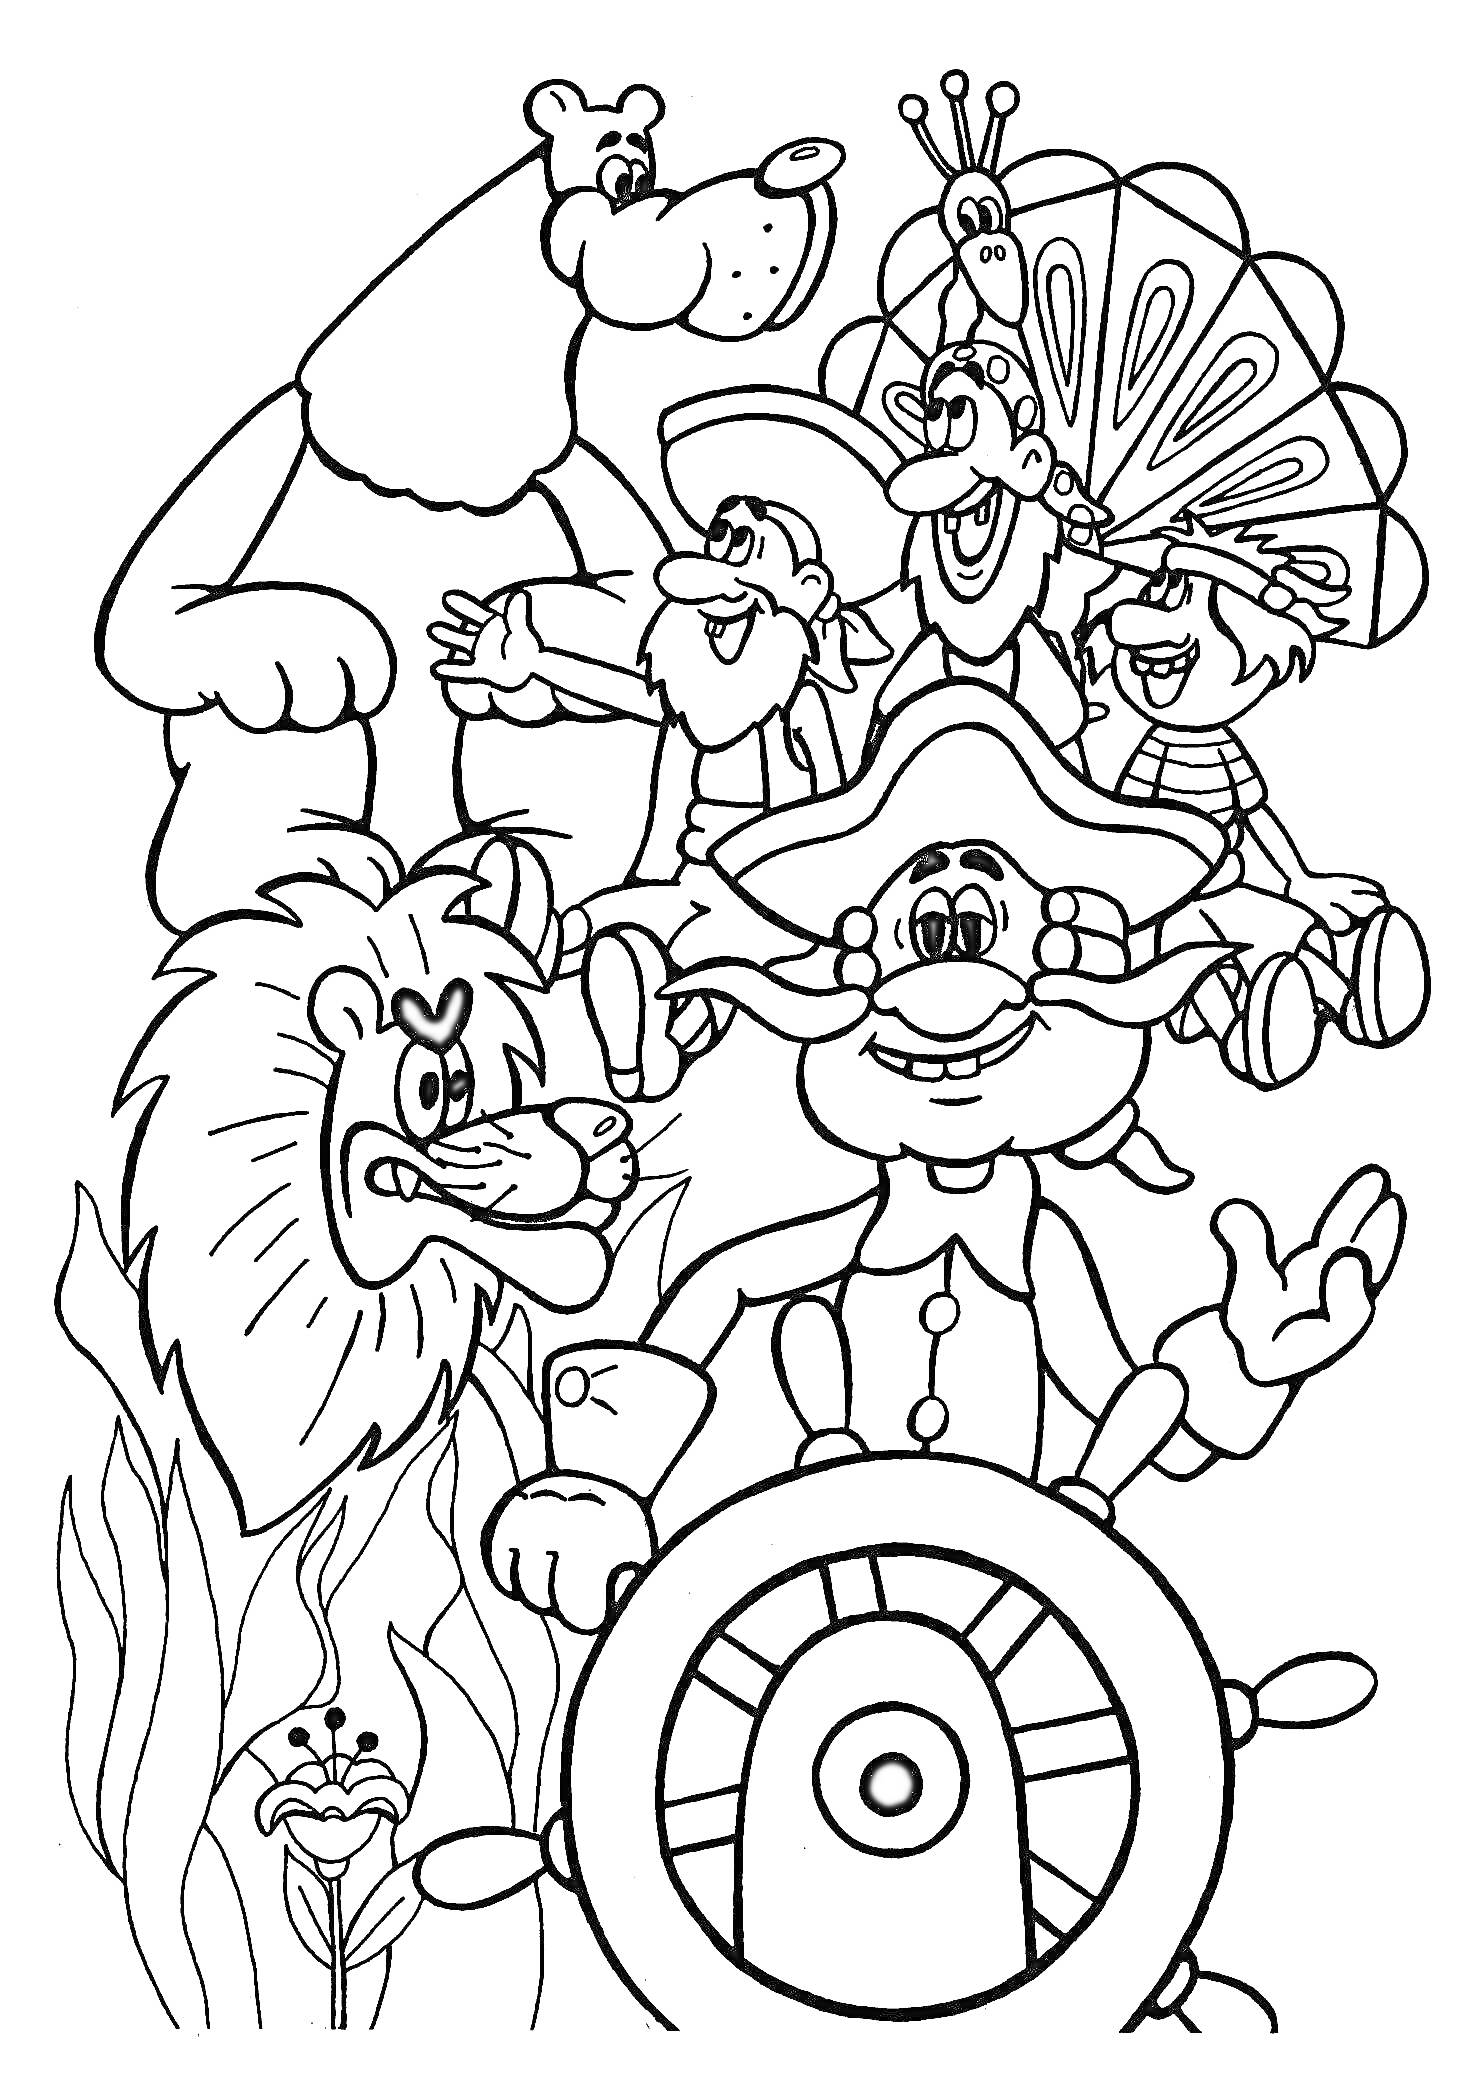 На раскраске изображено: Барон Мюнхгаузен, Штурвал, Лев, Медведь, Павлин, Человек